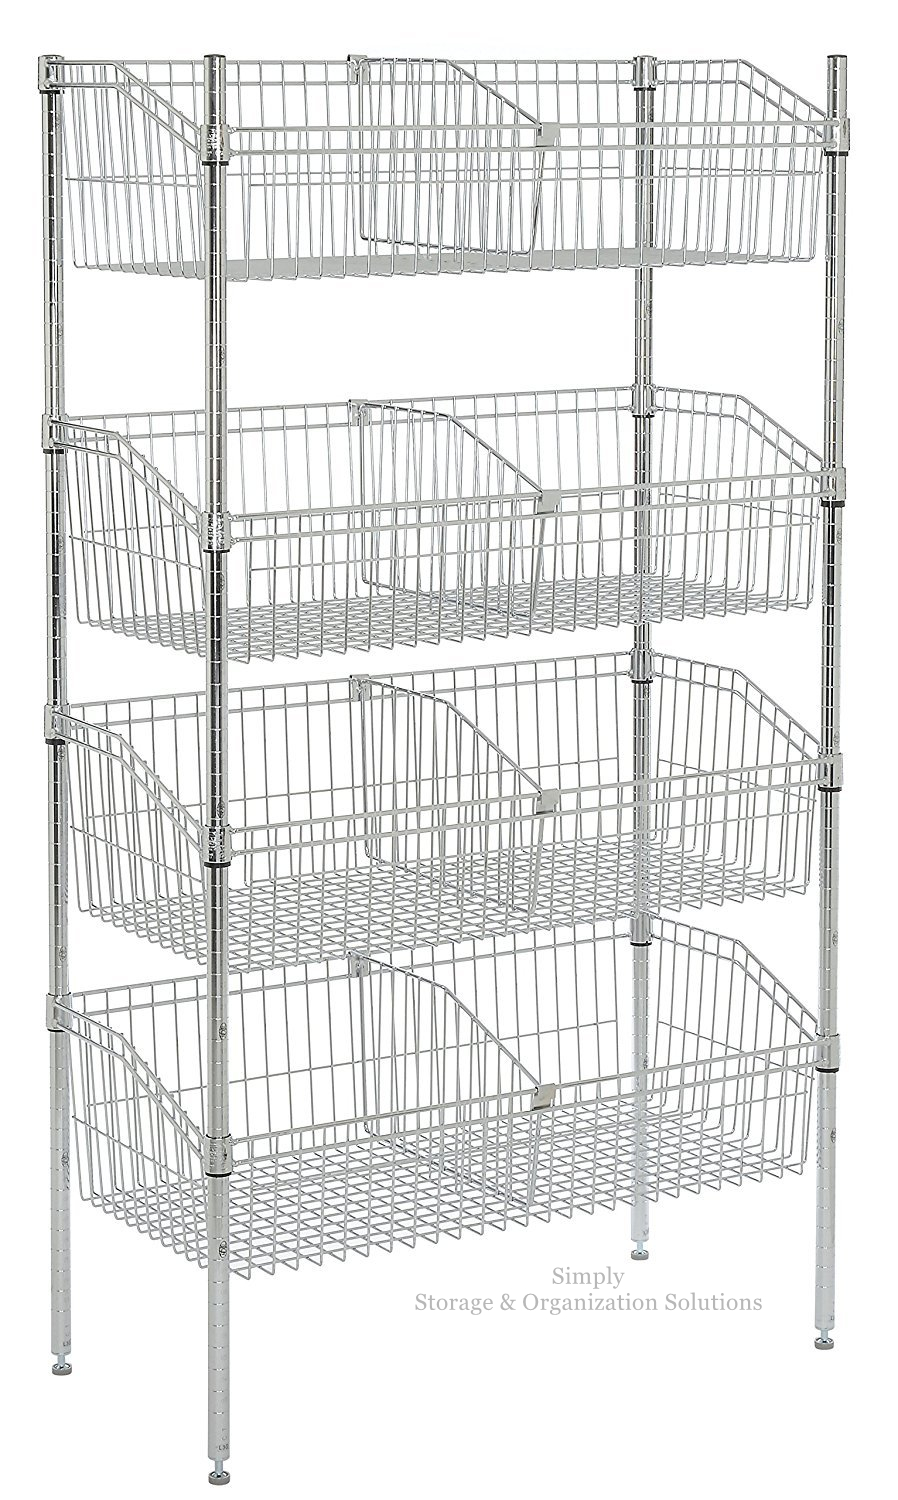 8 - Basket Retail Storage Silver Chrome Finish Wire Grid Baskets Shelving